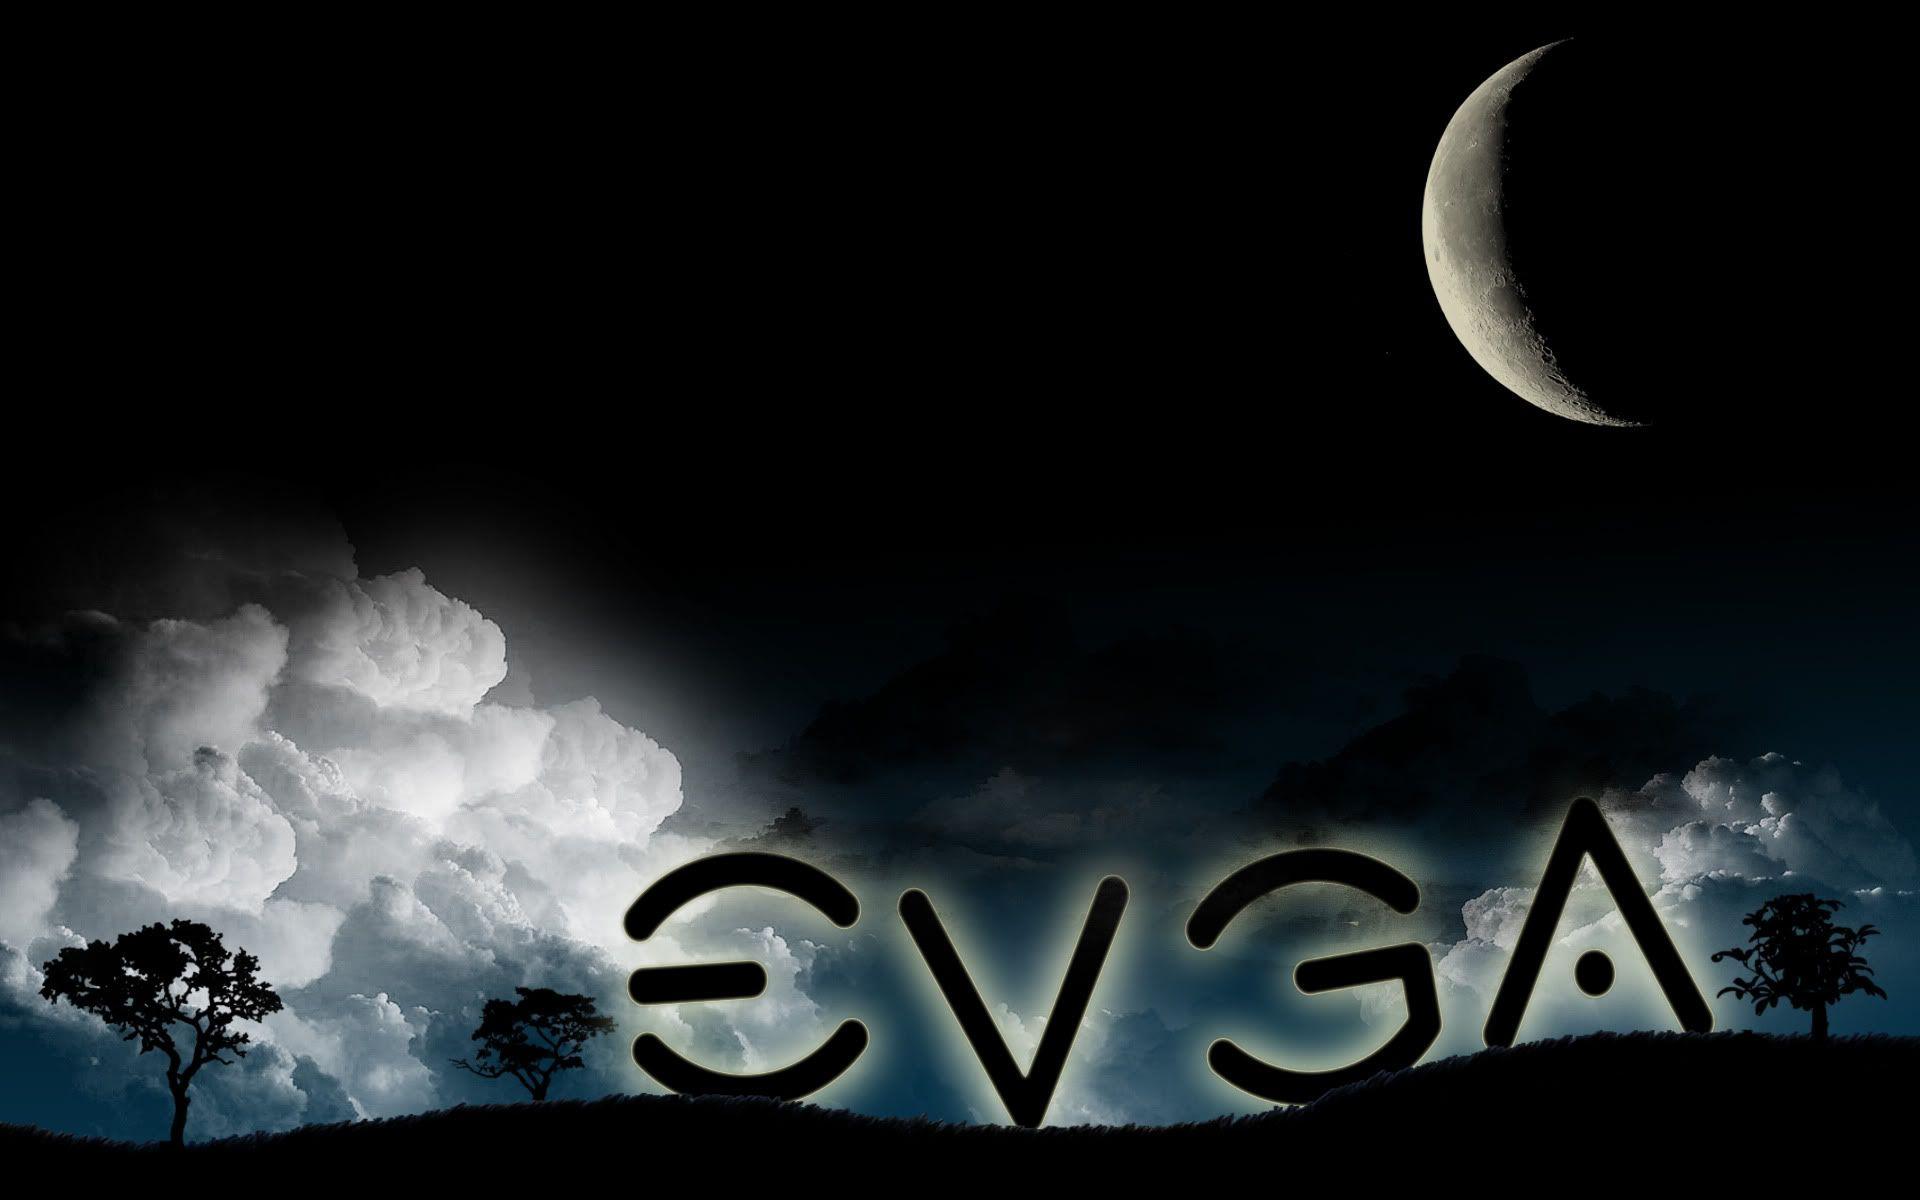 EVGA wallpaper + avatars